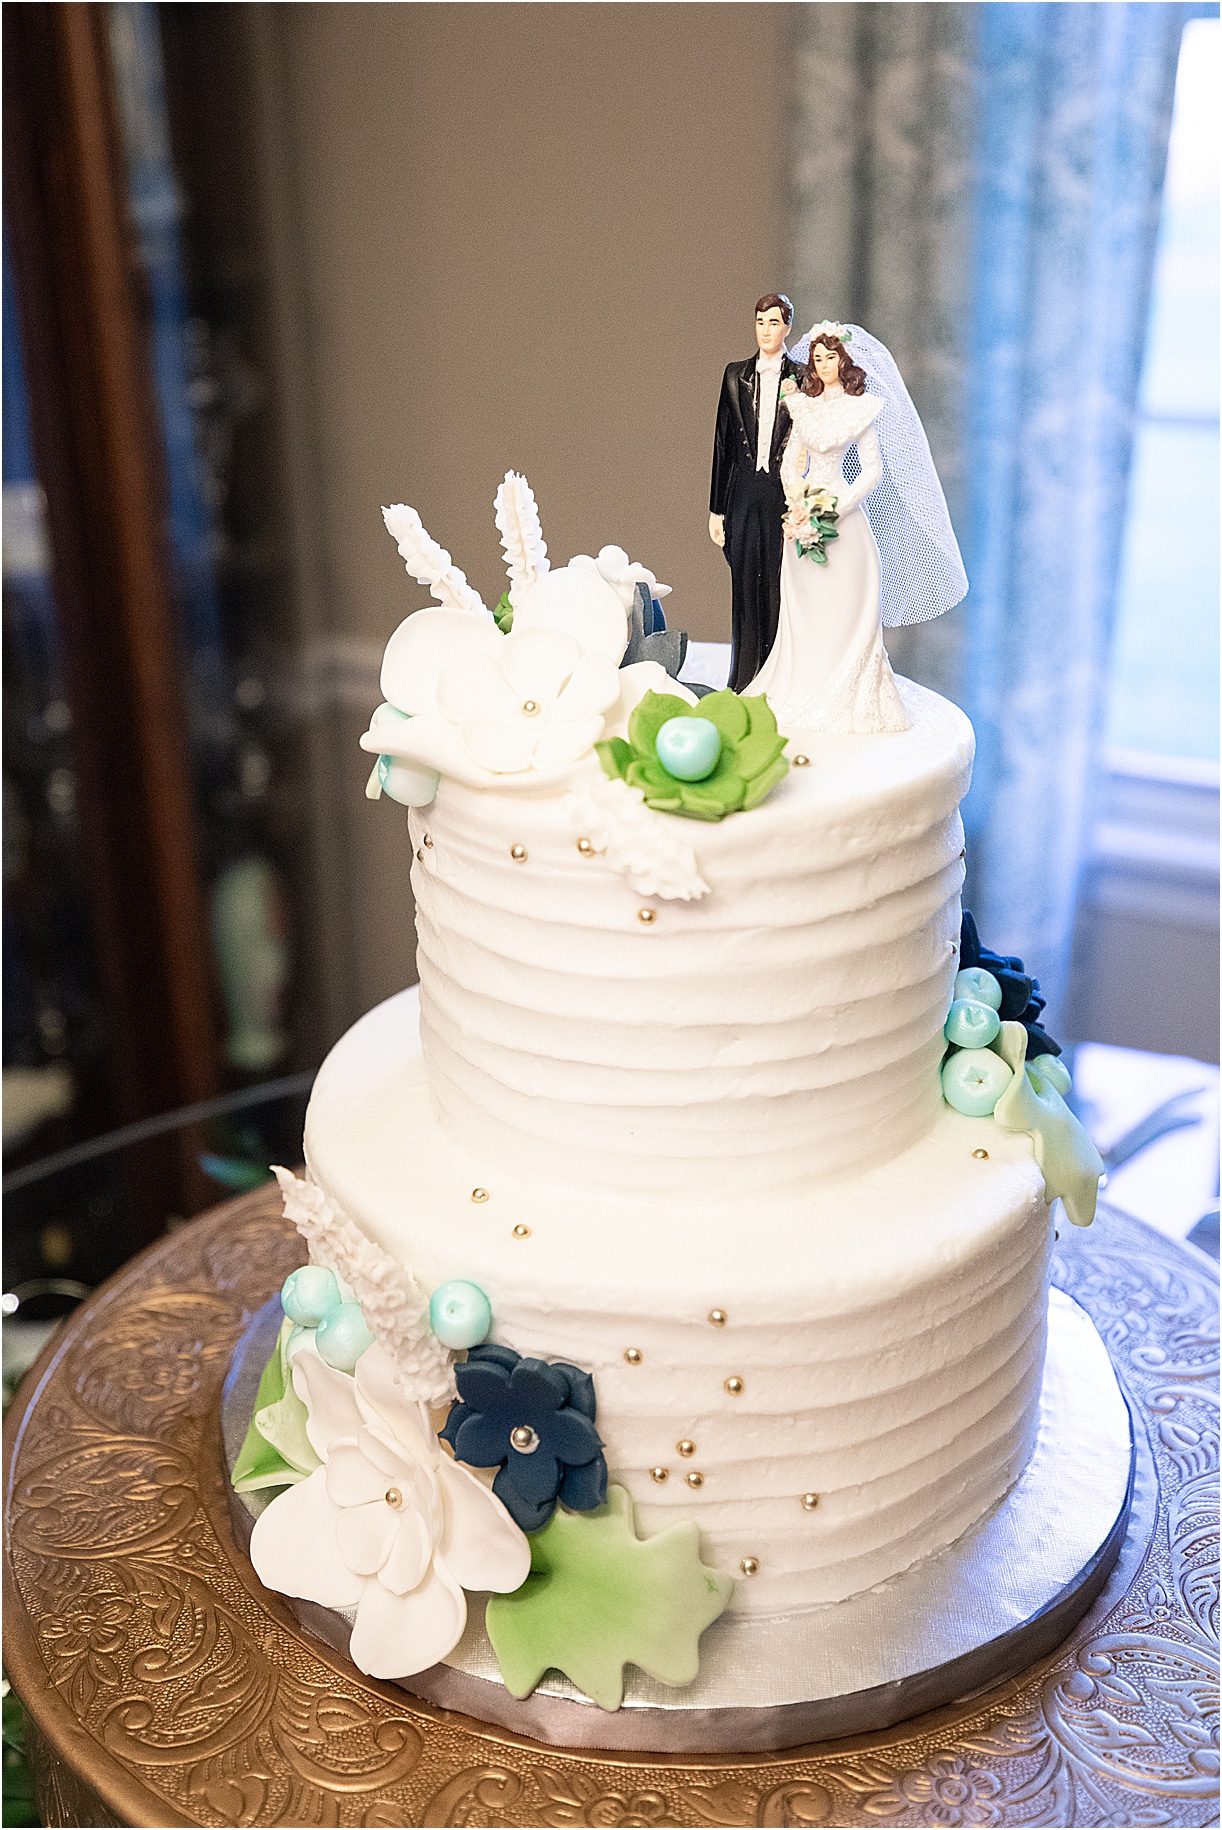 Small Wedding Ideas Home Wedding Decorations | Hill City Bride Virginia Weddings Cake